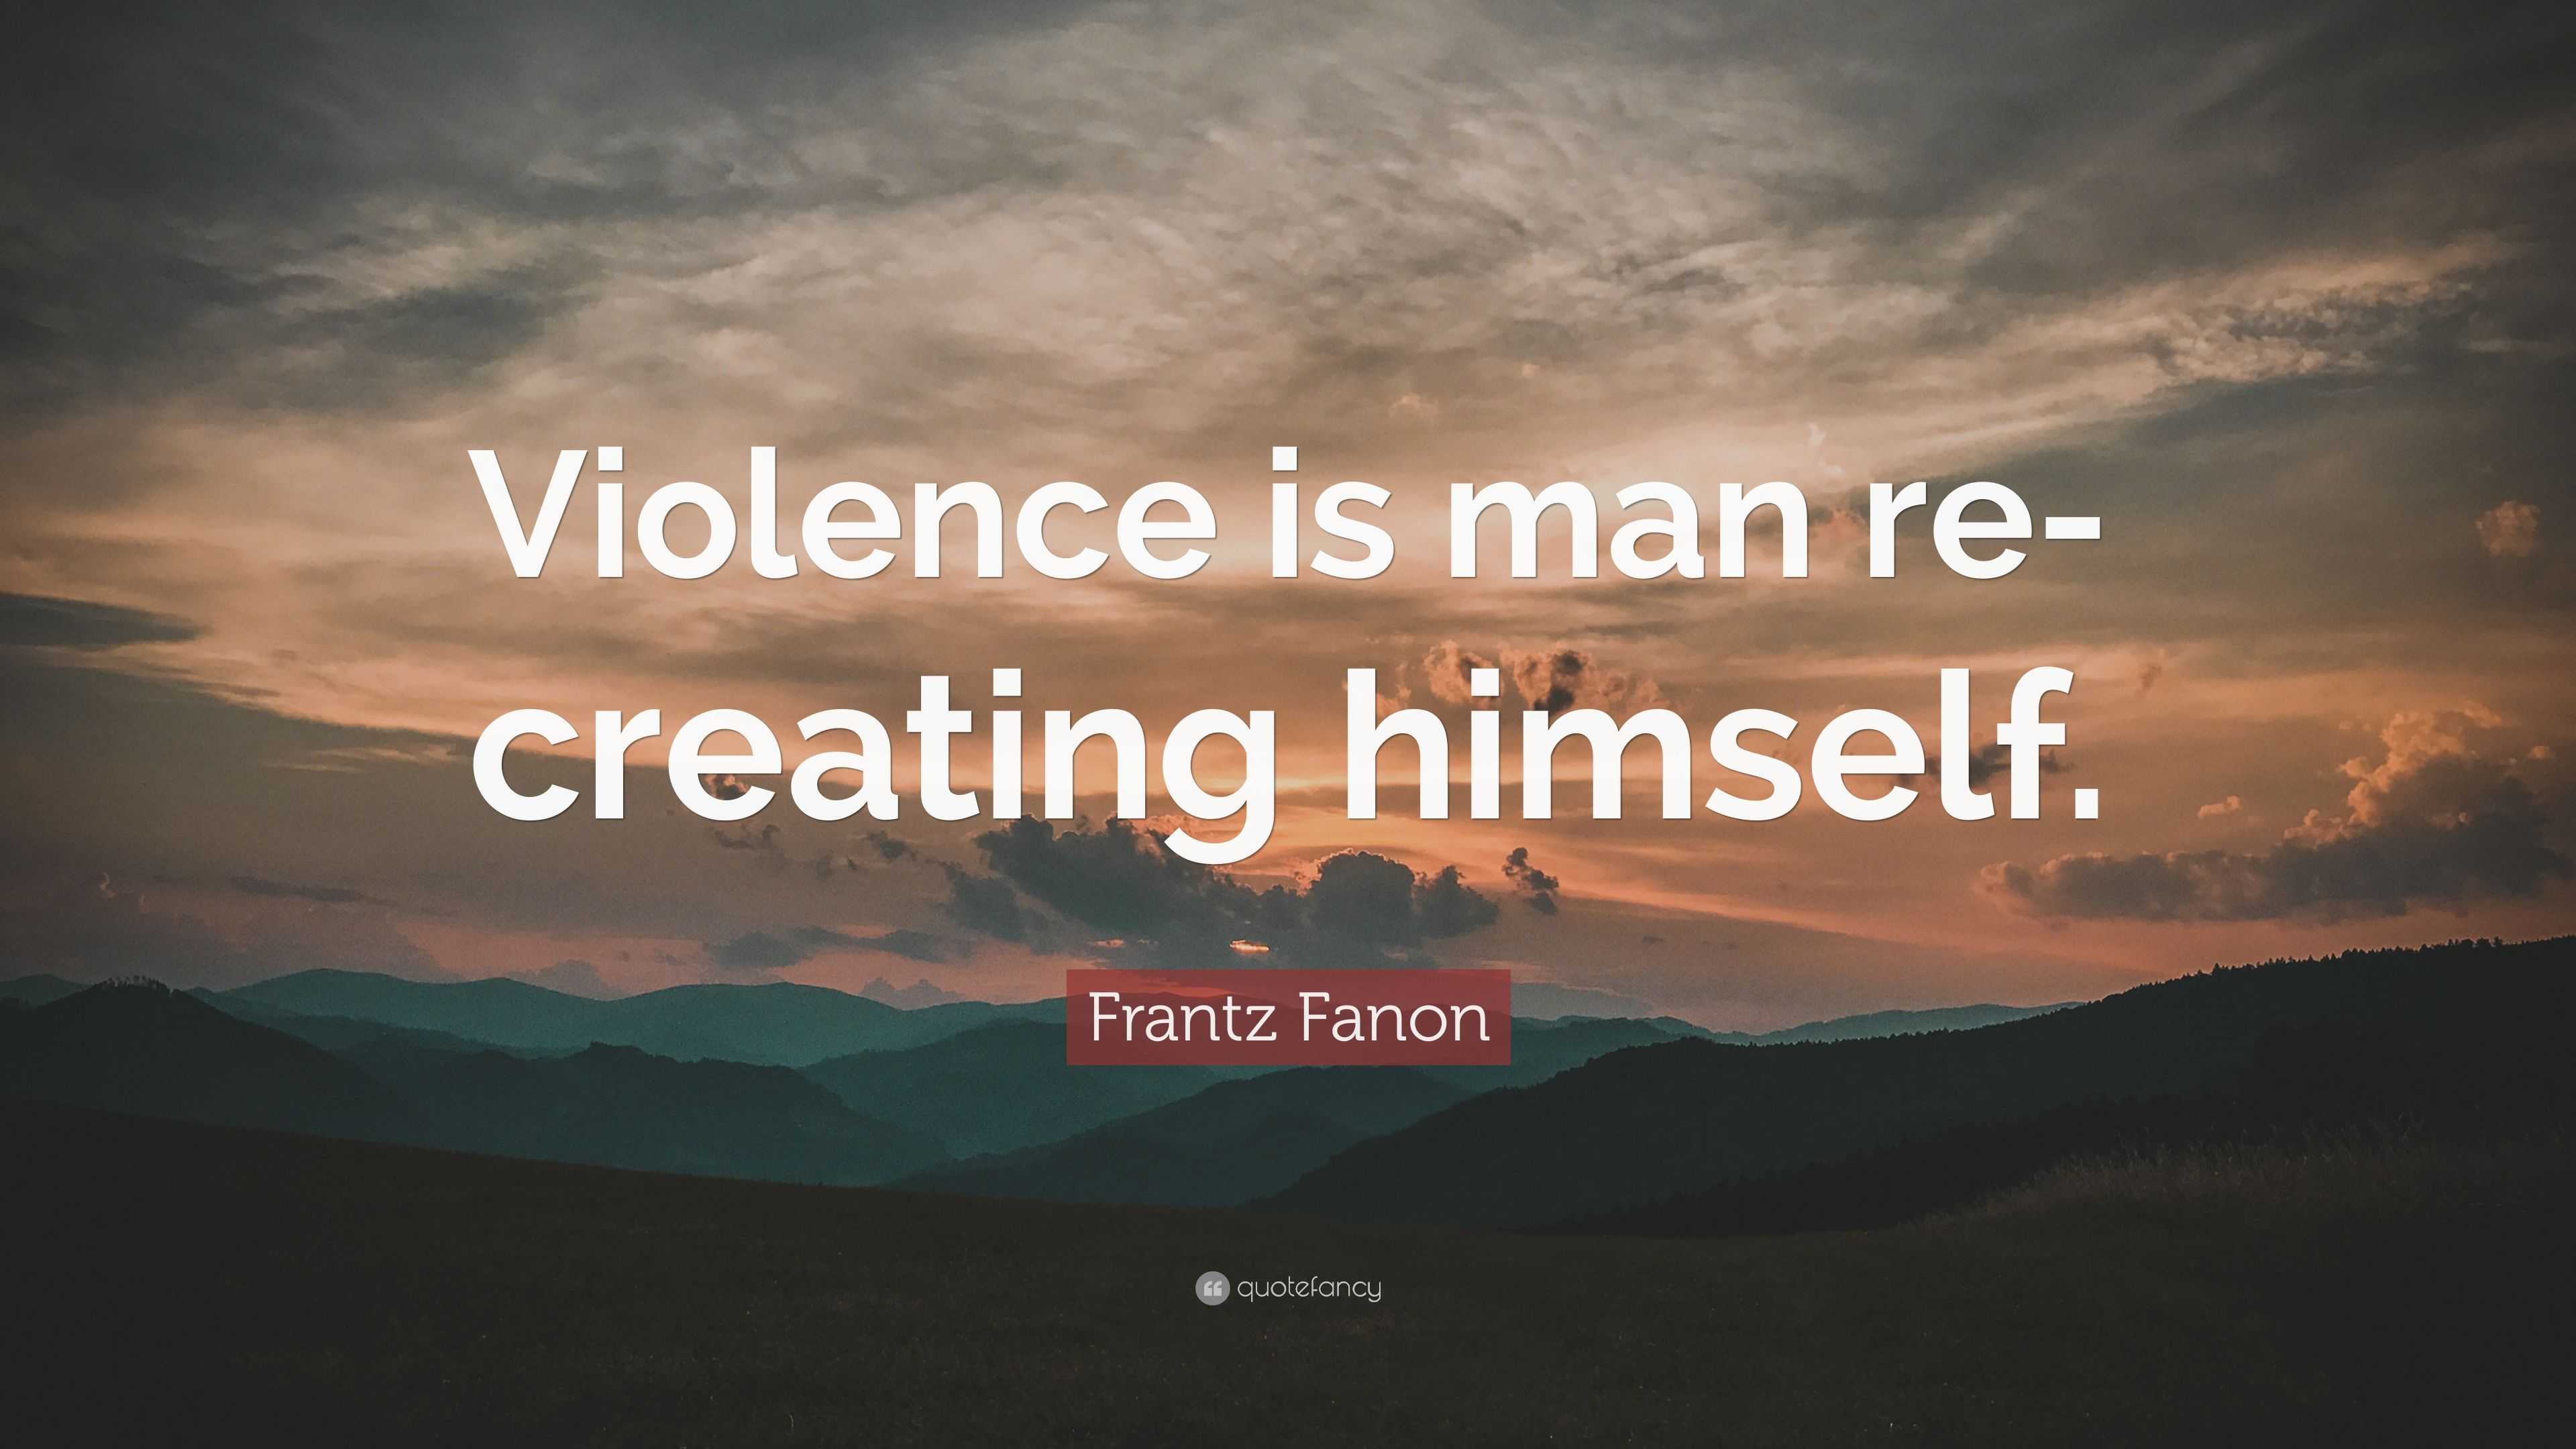 fanon on violence essay